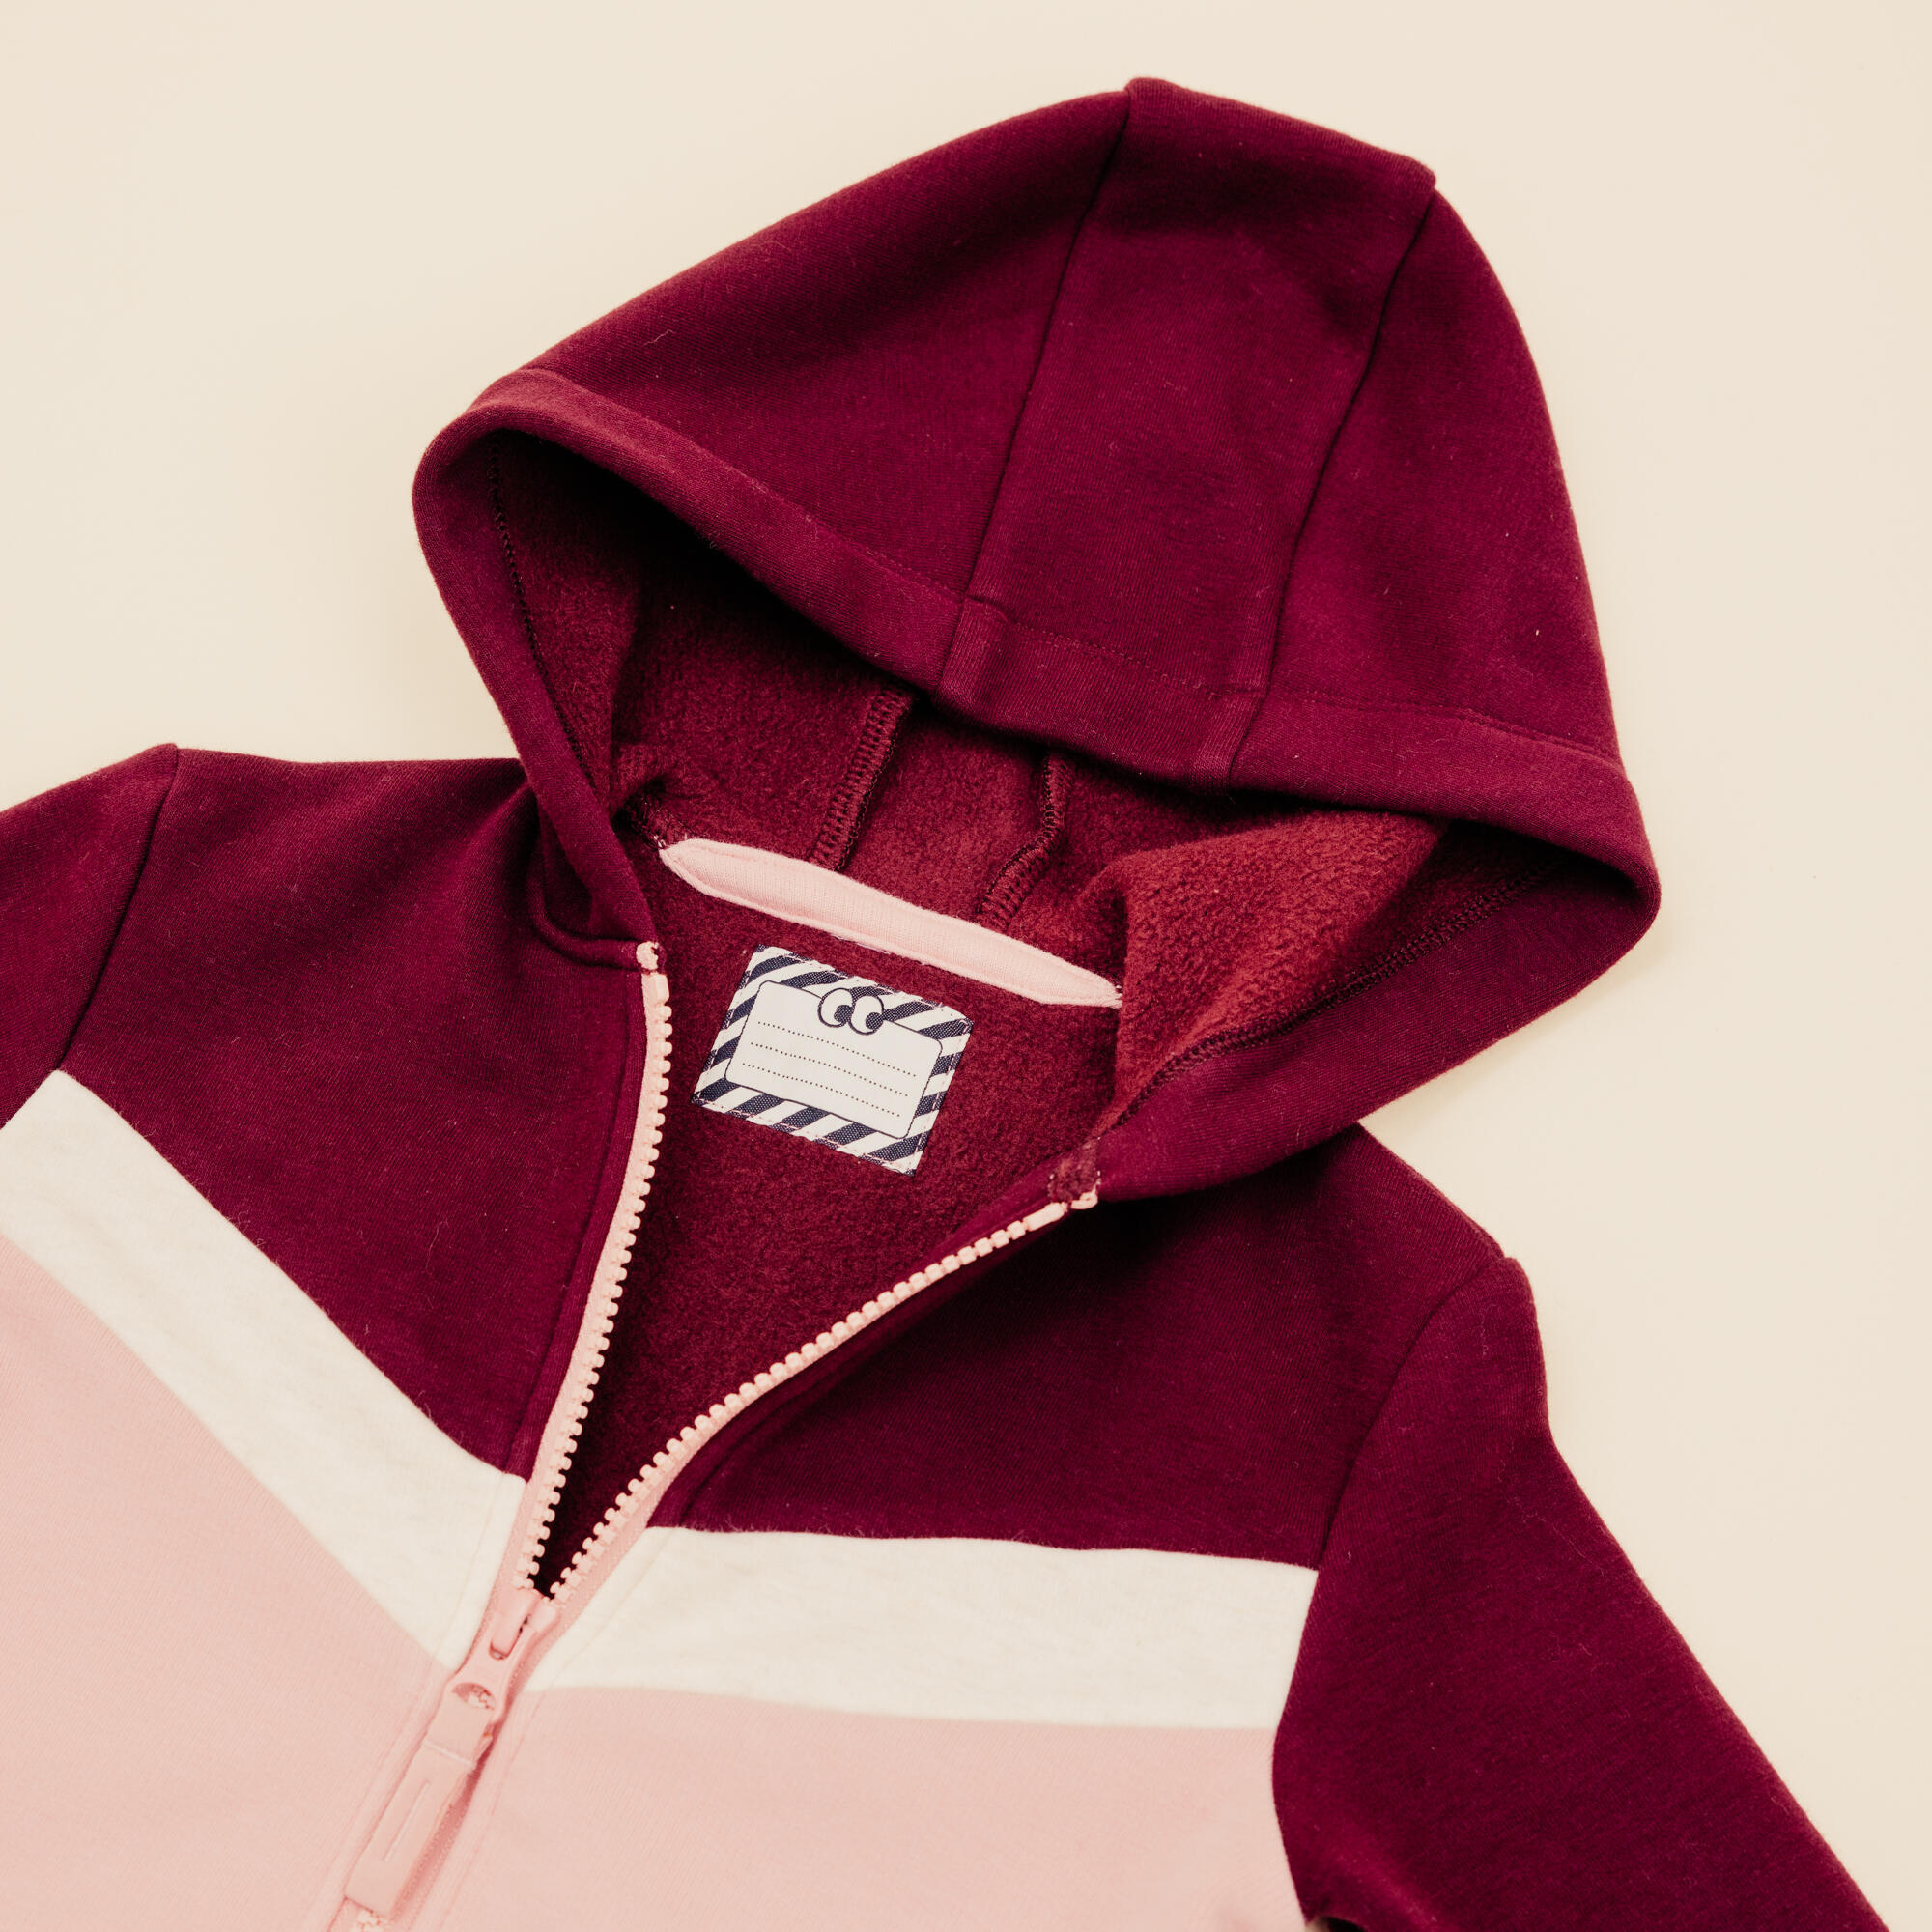 Baby's Zip-Up Sweatshirt - Plain Burgundy/Pink 6/6